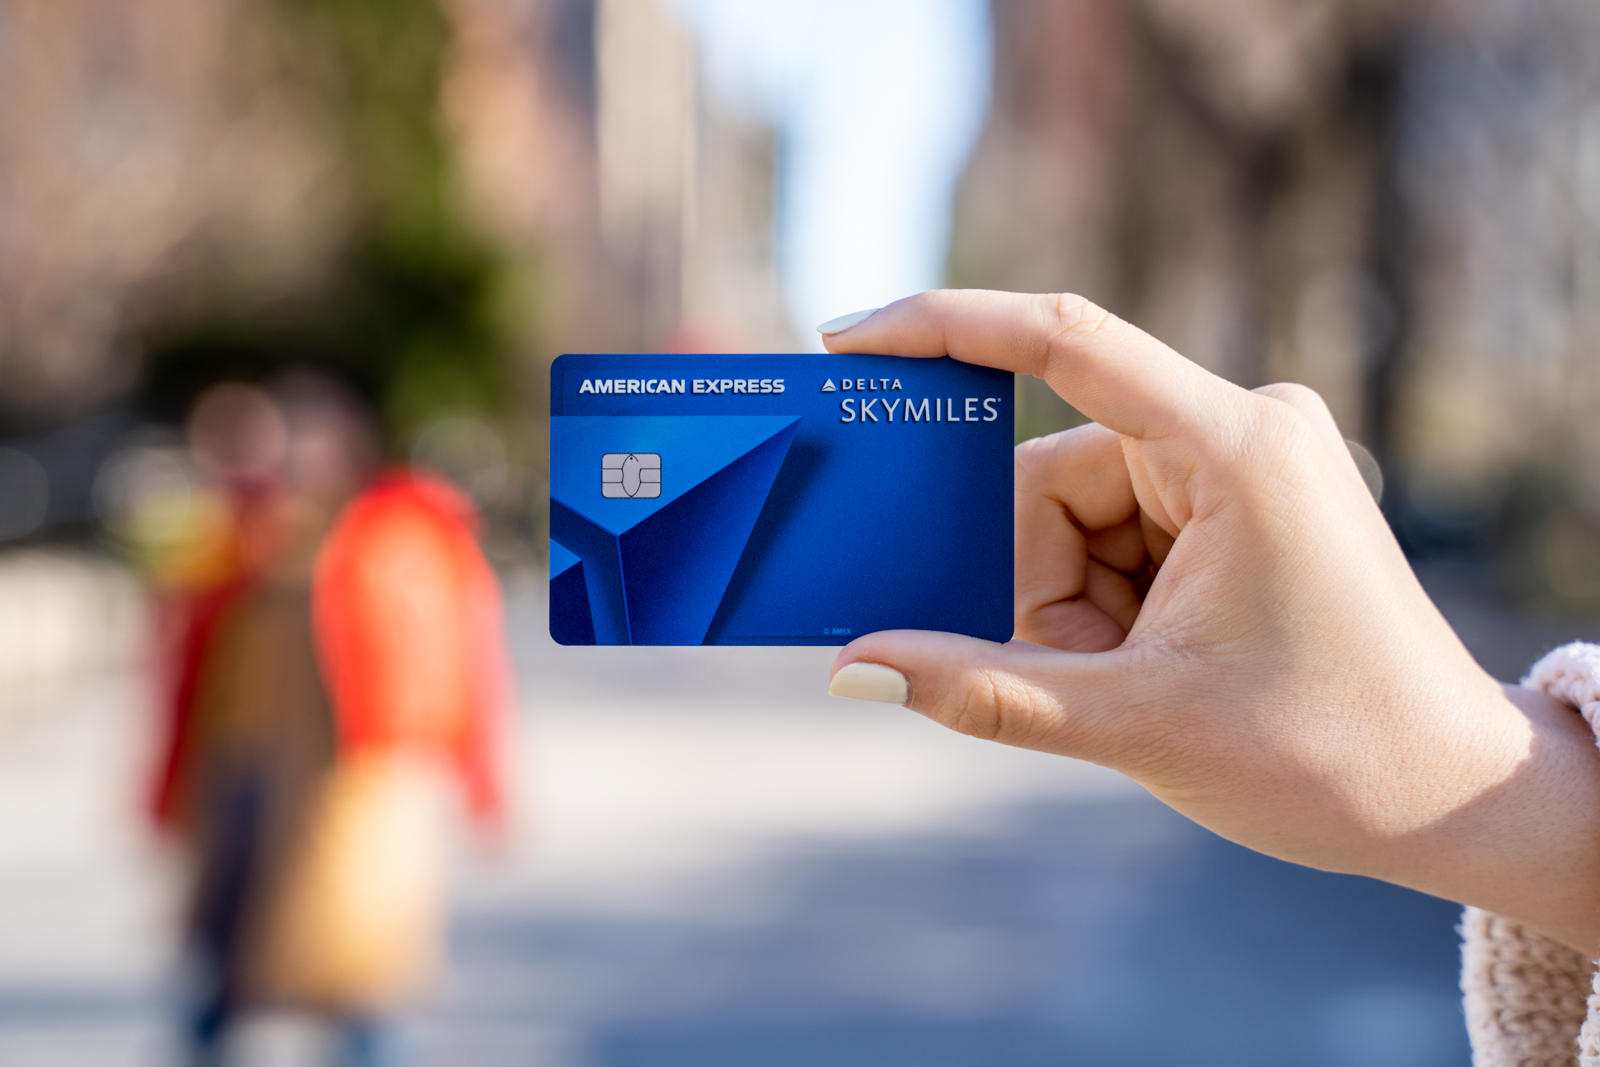 Delta SkyMiles Platinum American Express credit card review